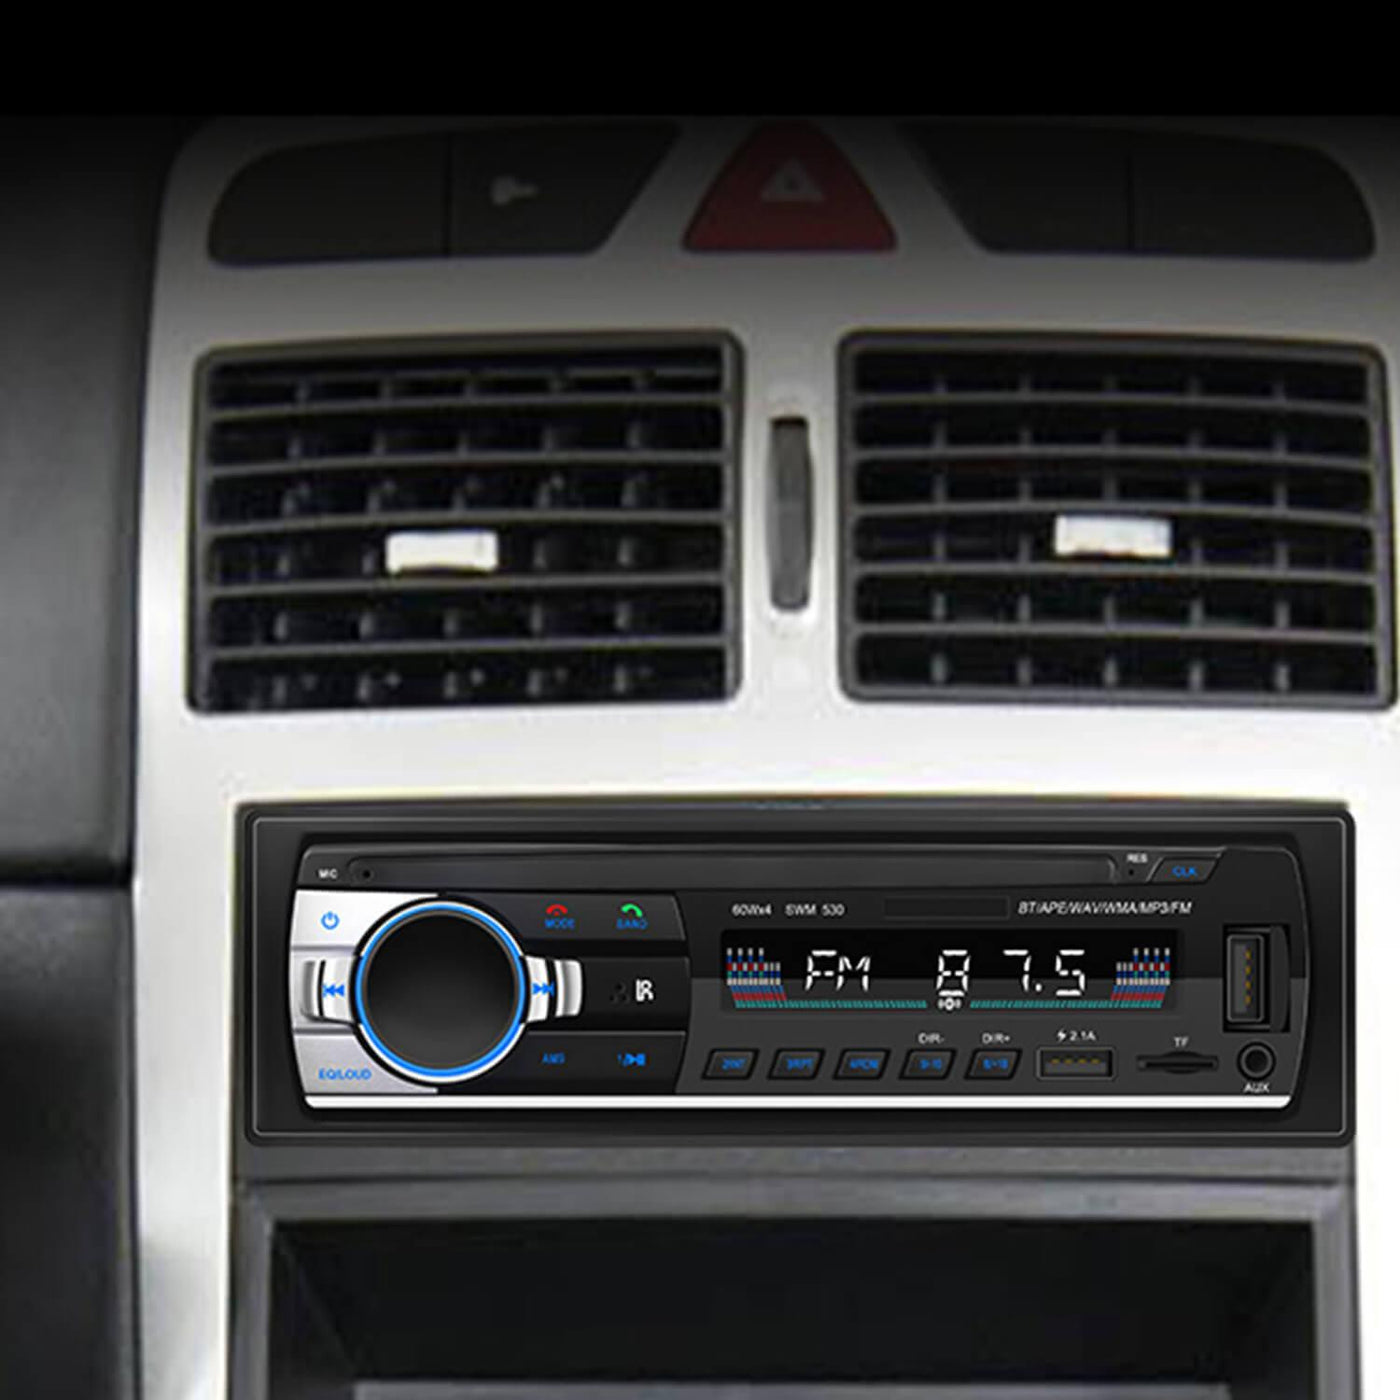 ESSGOO Autoradio Bluetooth DAB Autoradio 1 Din Autoradio In-Dash